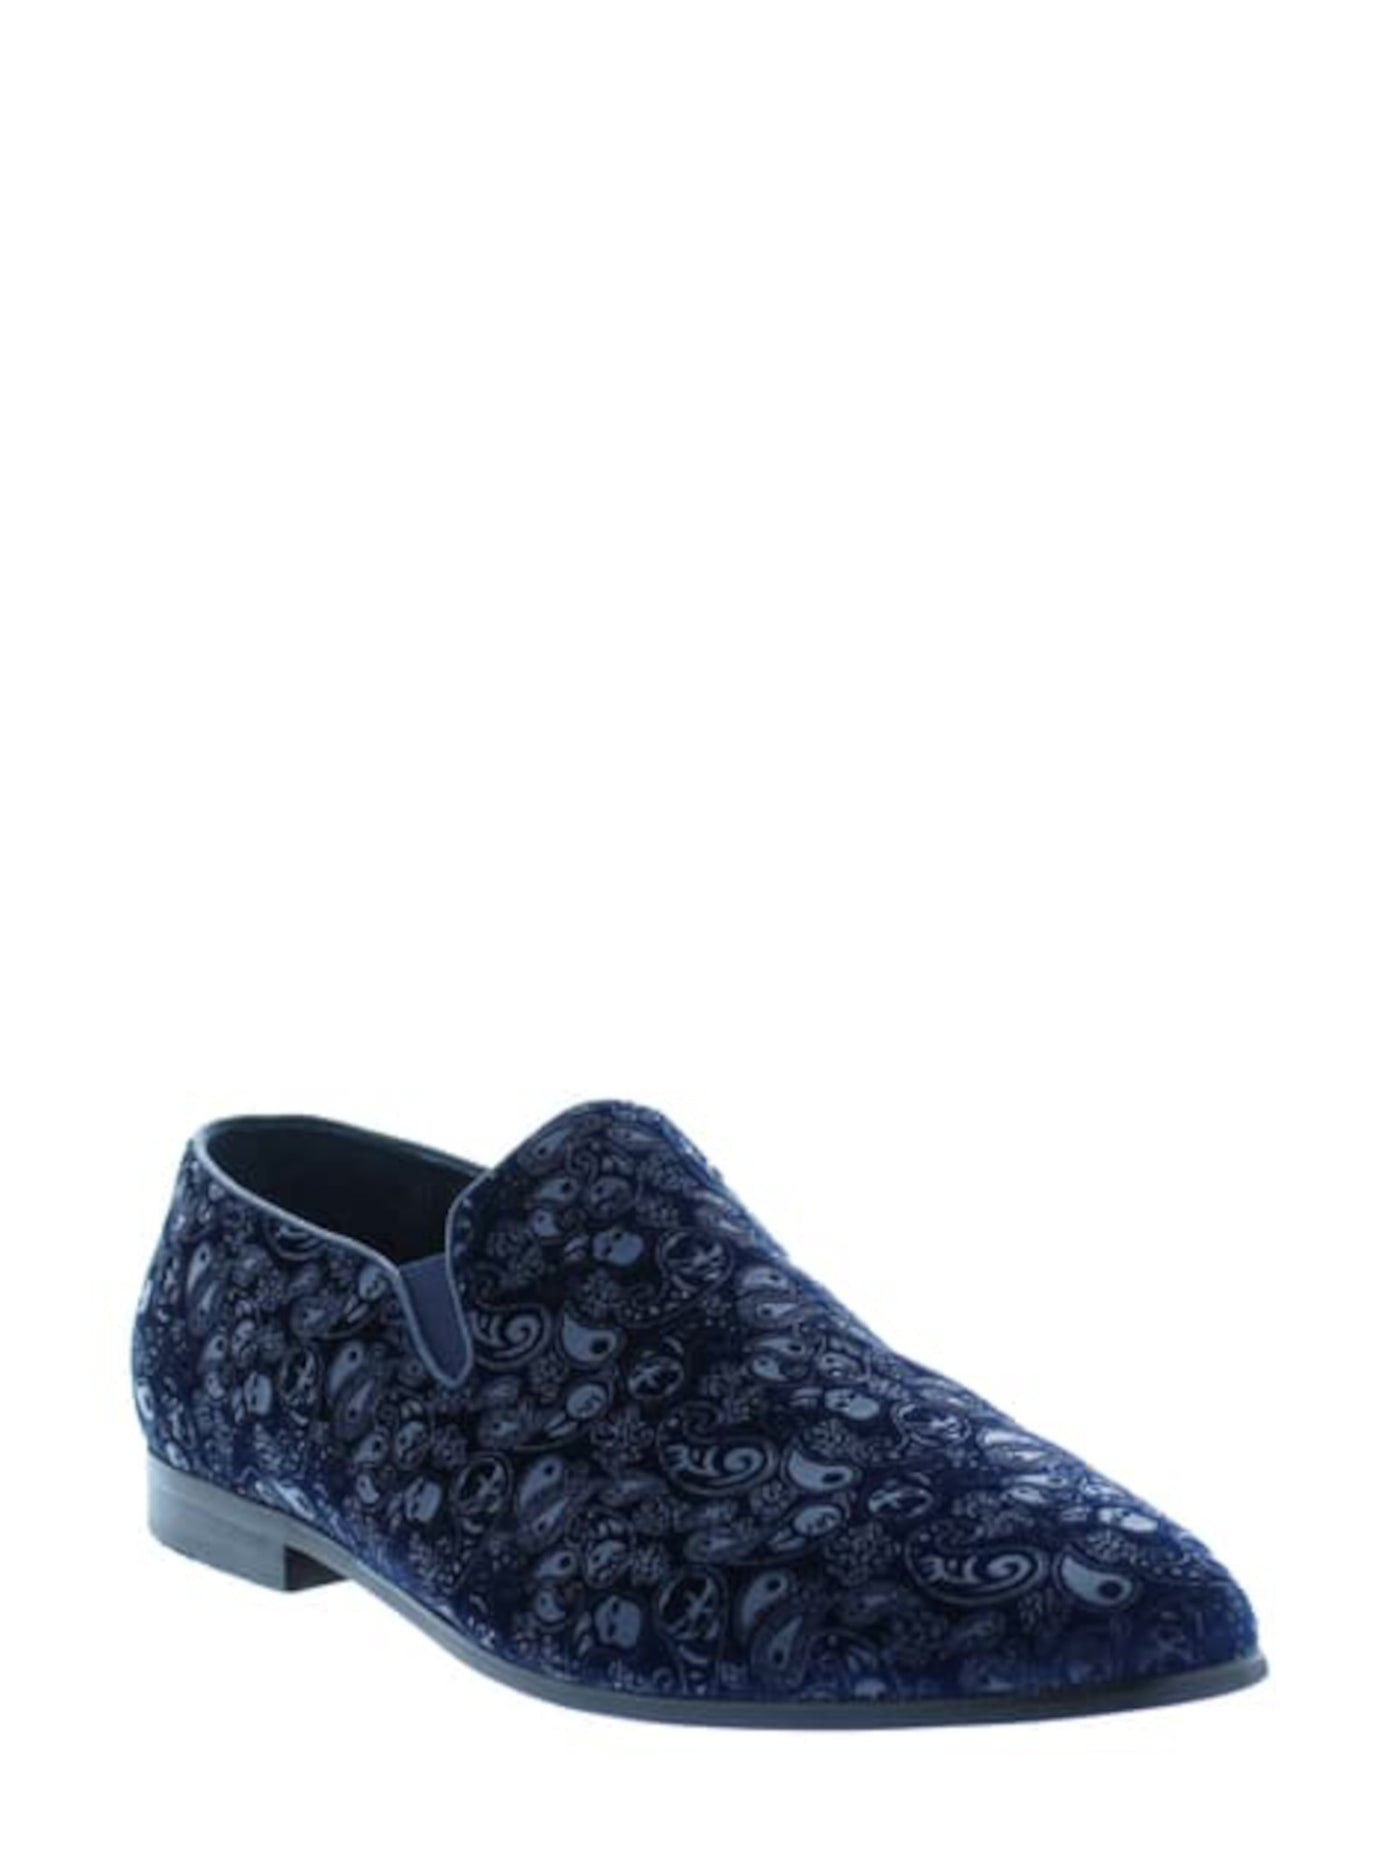 ROBERT GRAHAM Mens Navy Paisley Rodin Round Toe Block Heel Slip On Dress Loafers Shoes 11